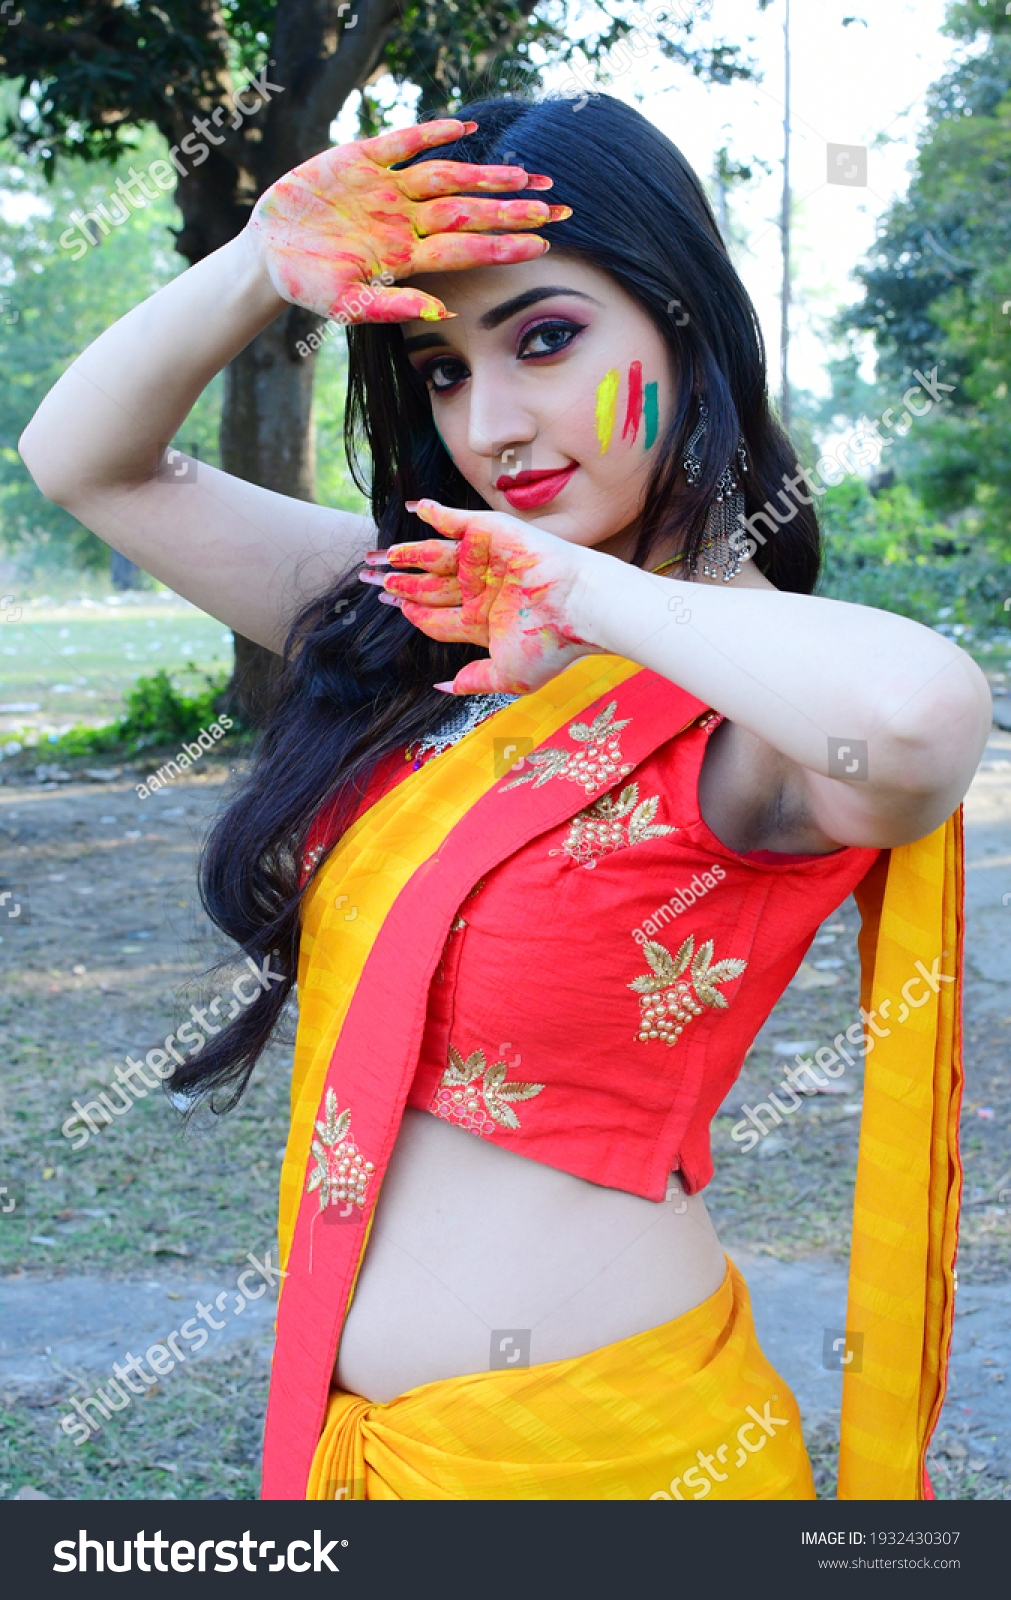 Hot girls in saree pics